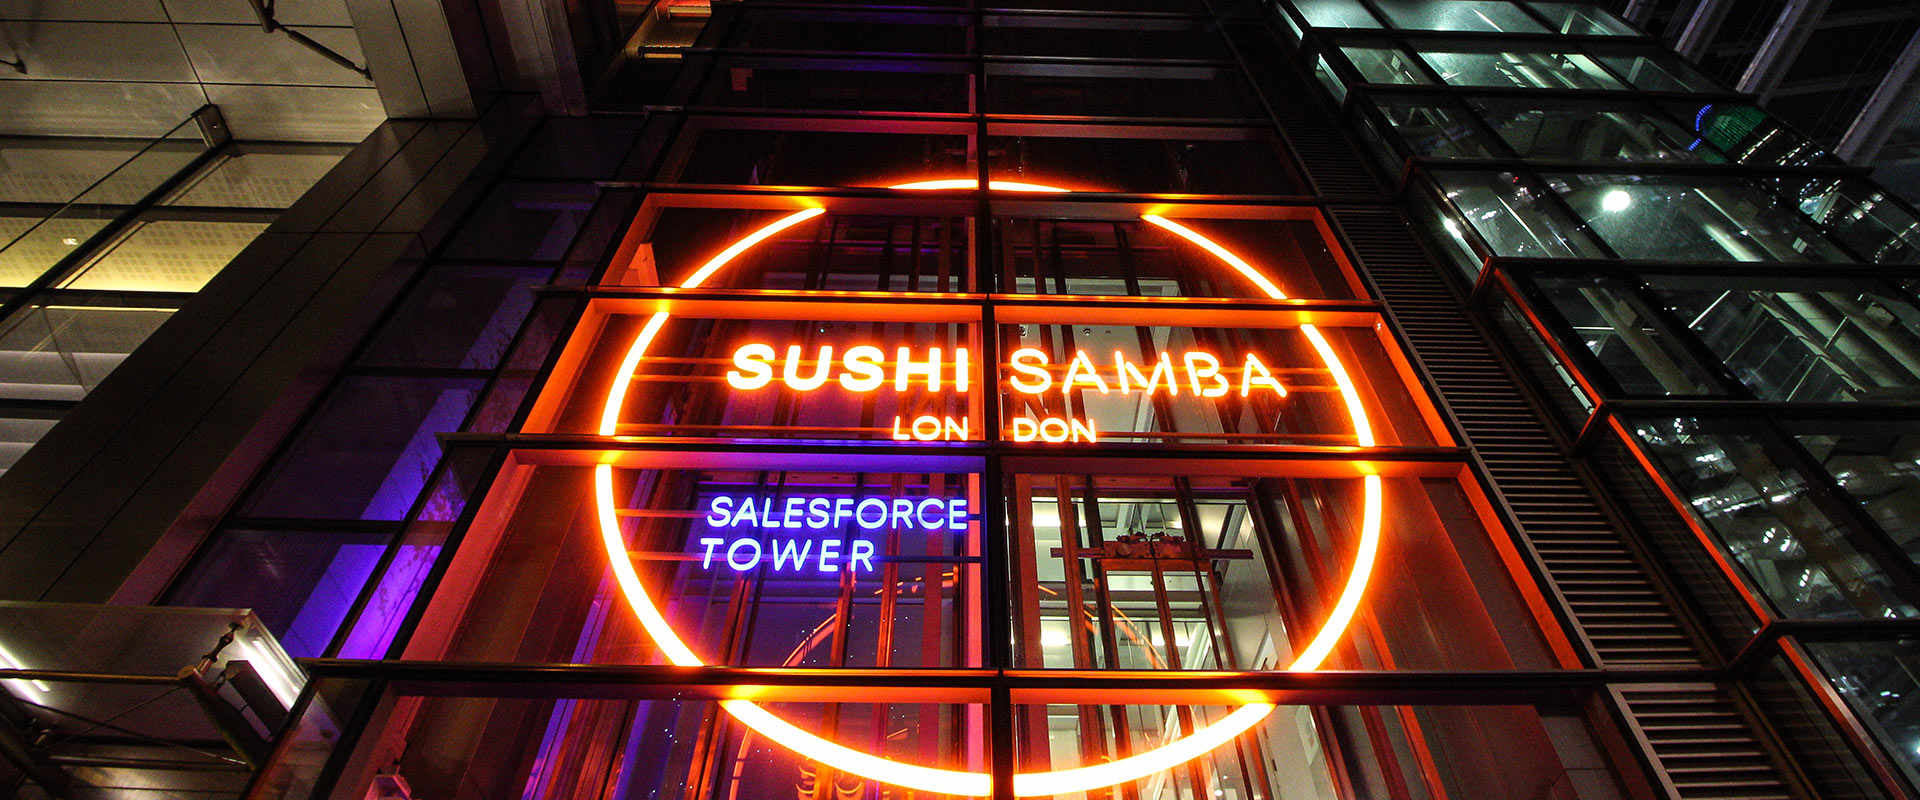 Sushisamba Restaurant | Berkeley Inspiration